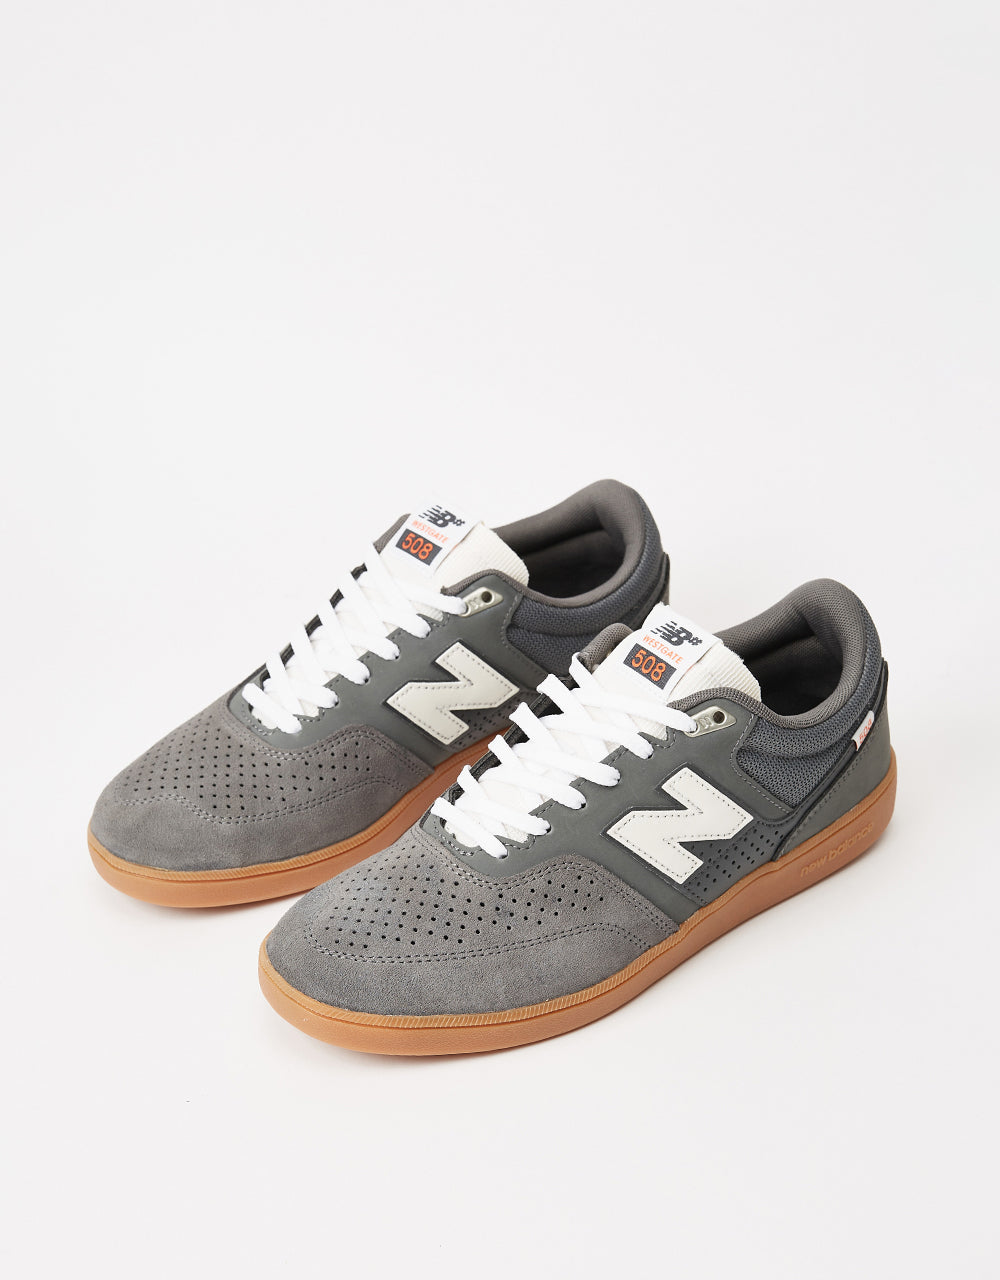 New Balance Numeric 508 Skate Shoes - Grey/Gum